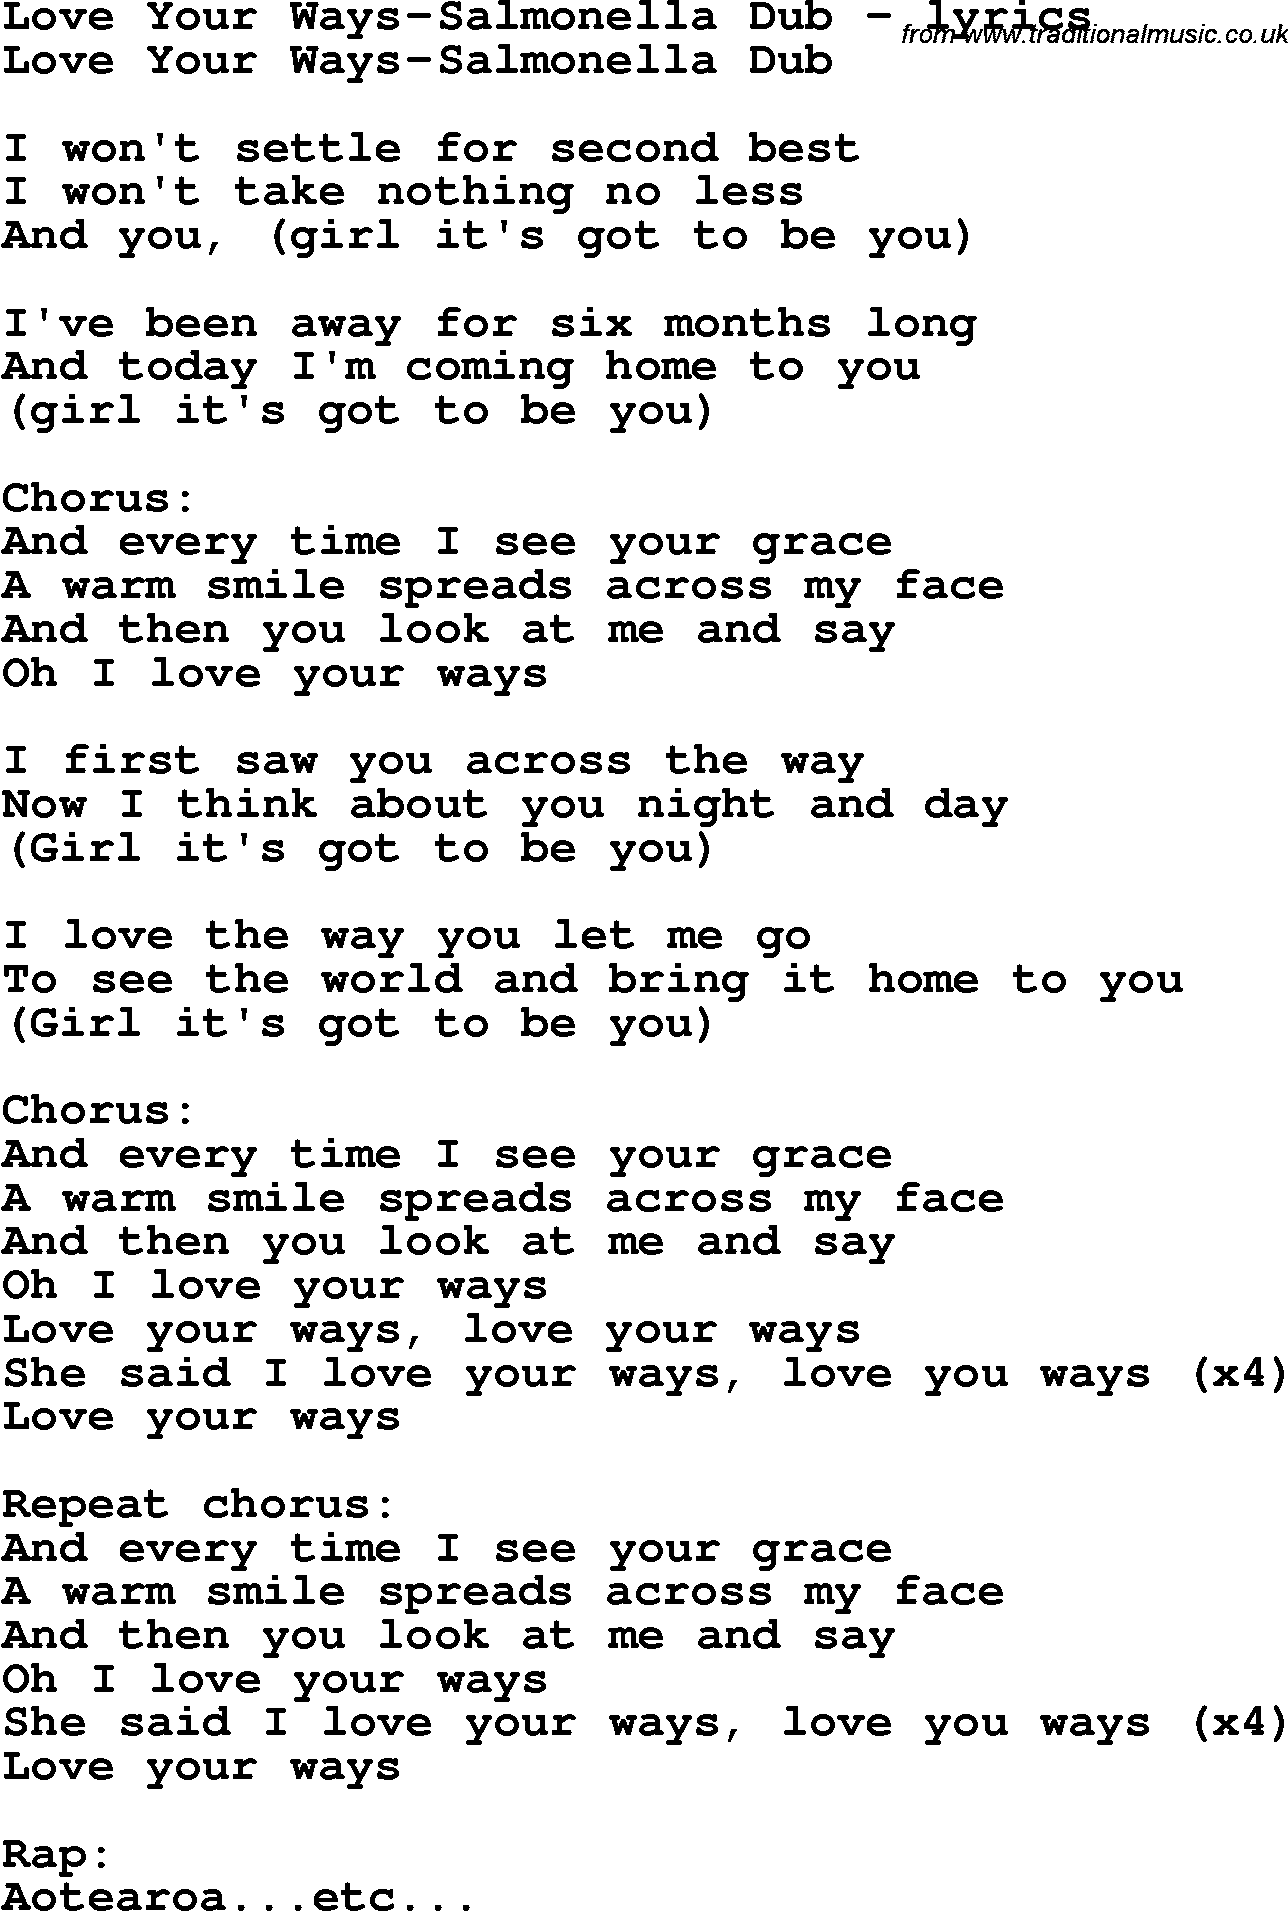 Love Song Lyrics for: Love Your Ways-Salmonella Dub